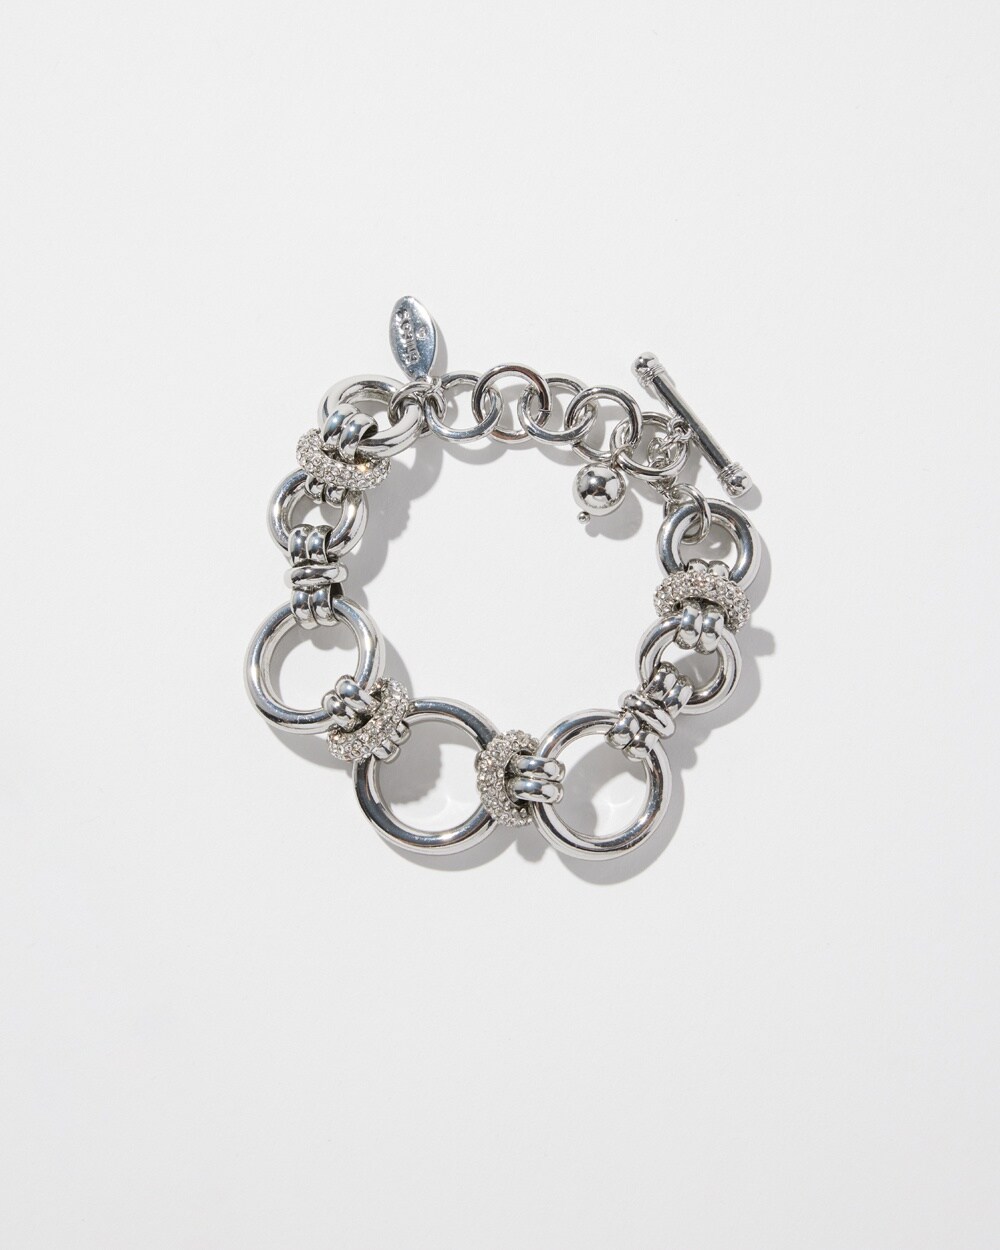 Silver Tone Links Bracelet